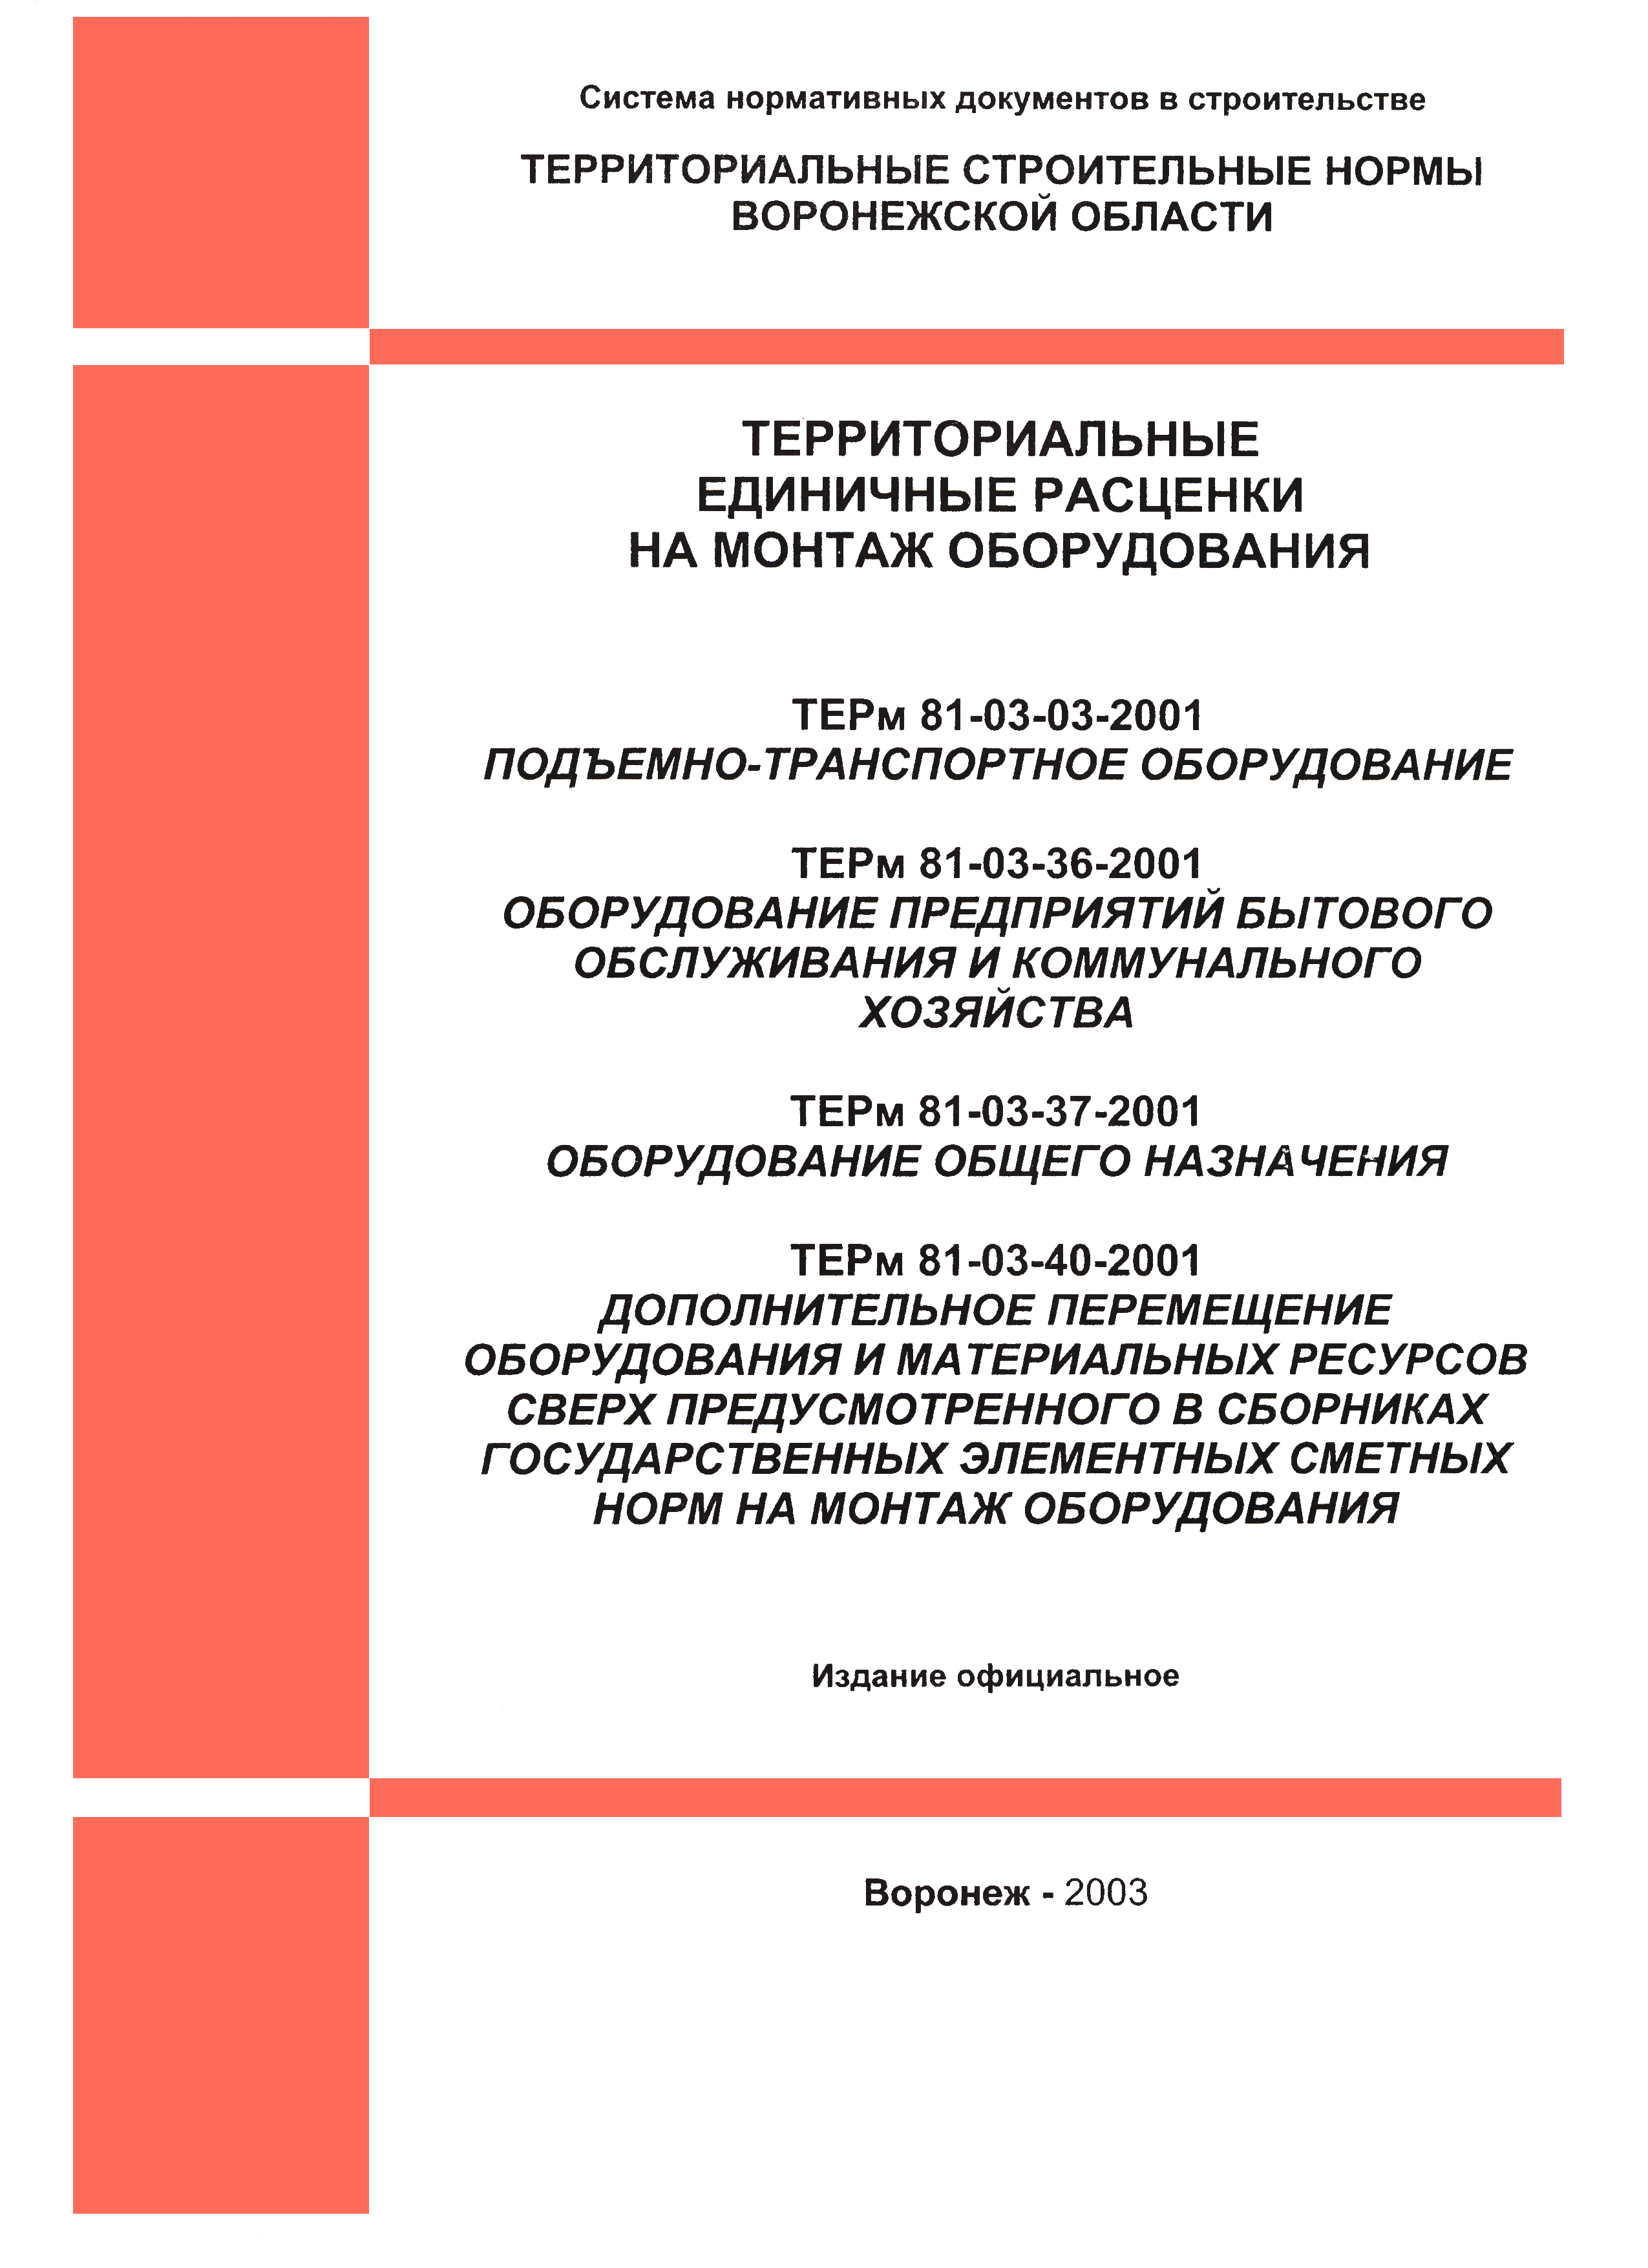 ТЕРм Воронежской области 81-03-36-2001